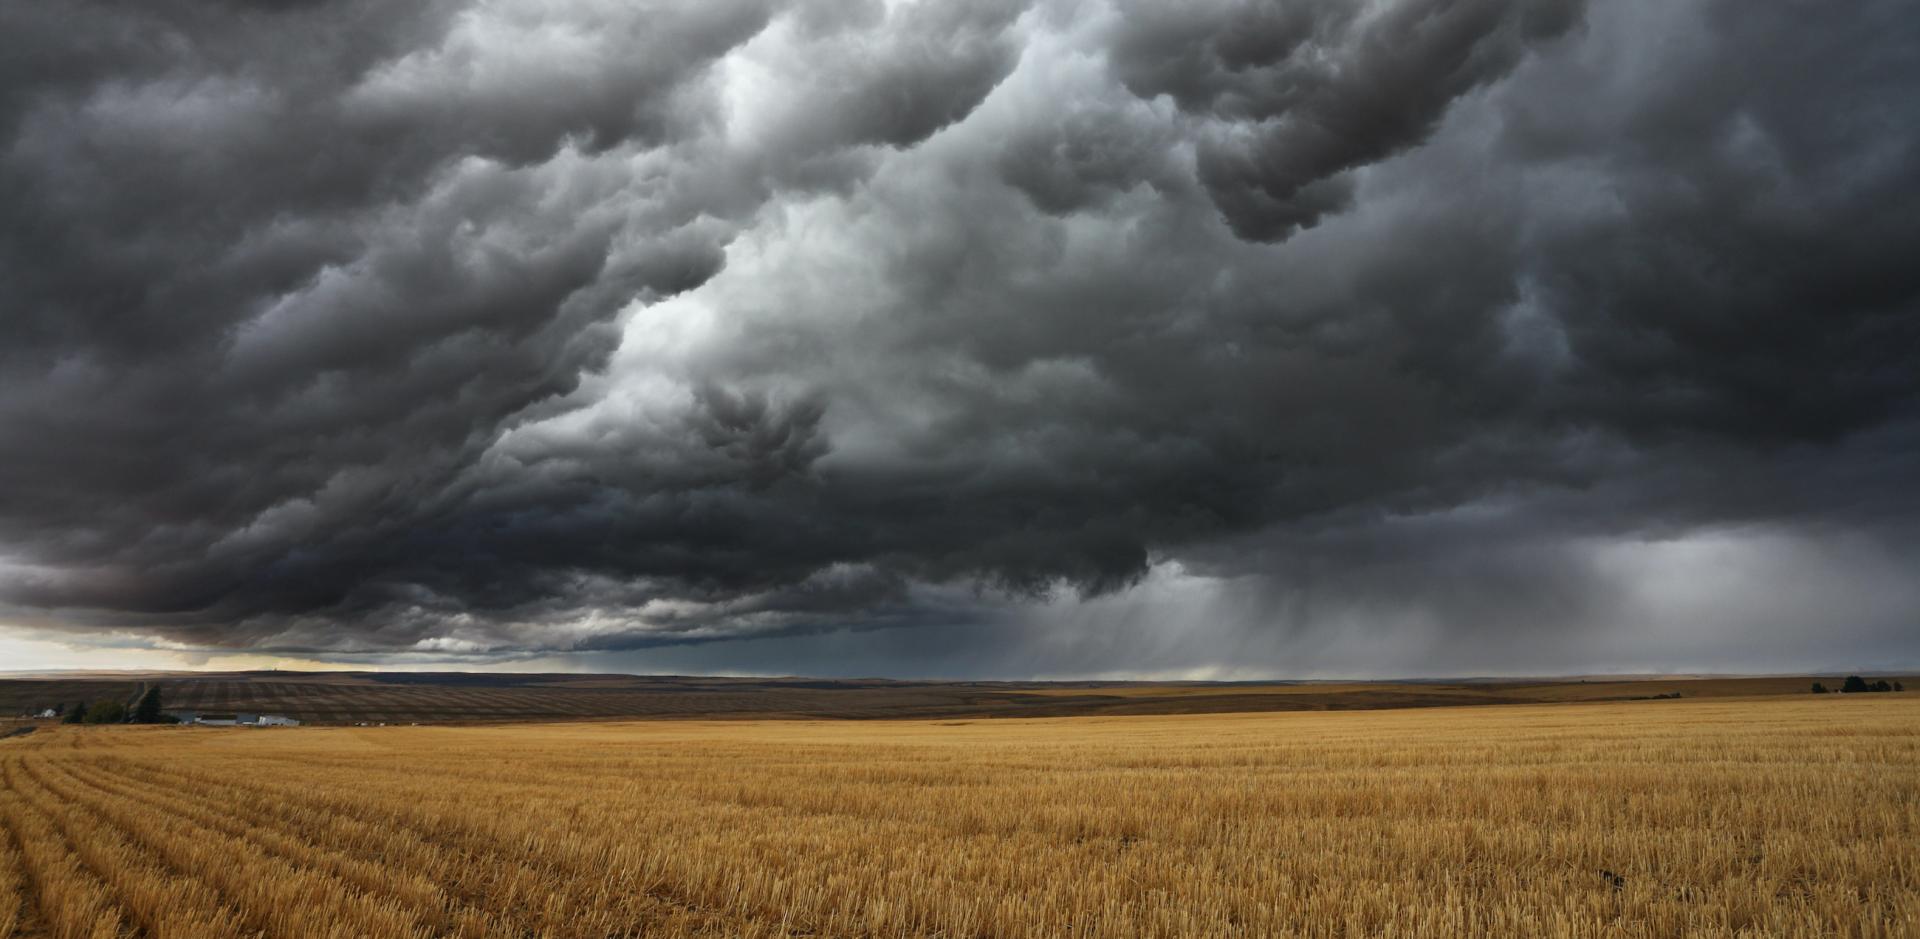 Dark clouds from a thunderstorm above an open field